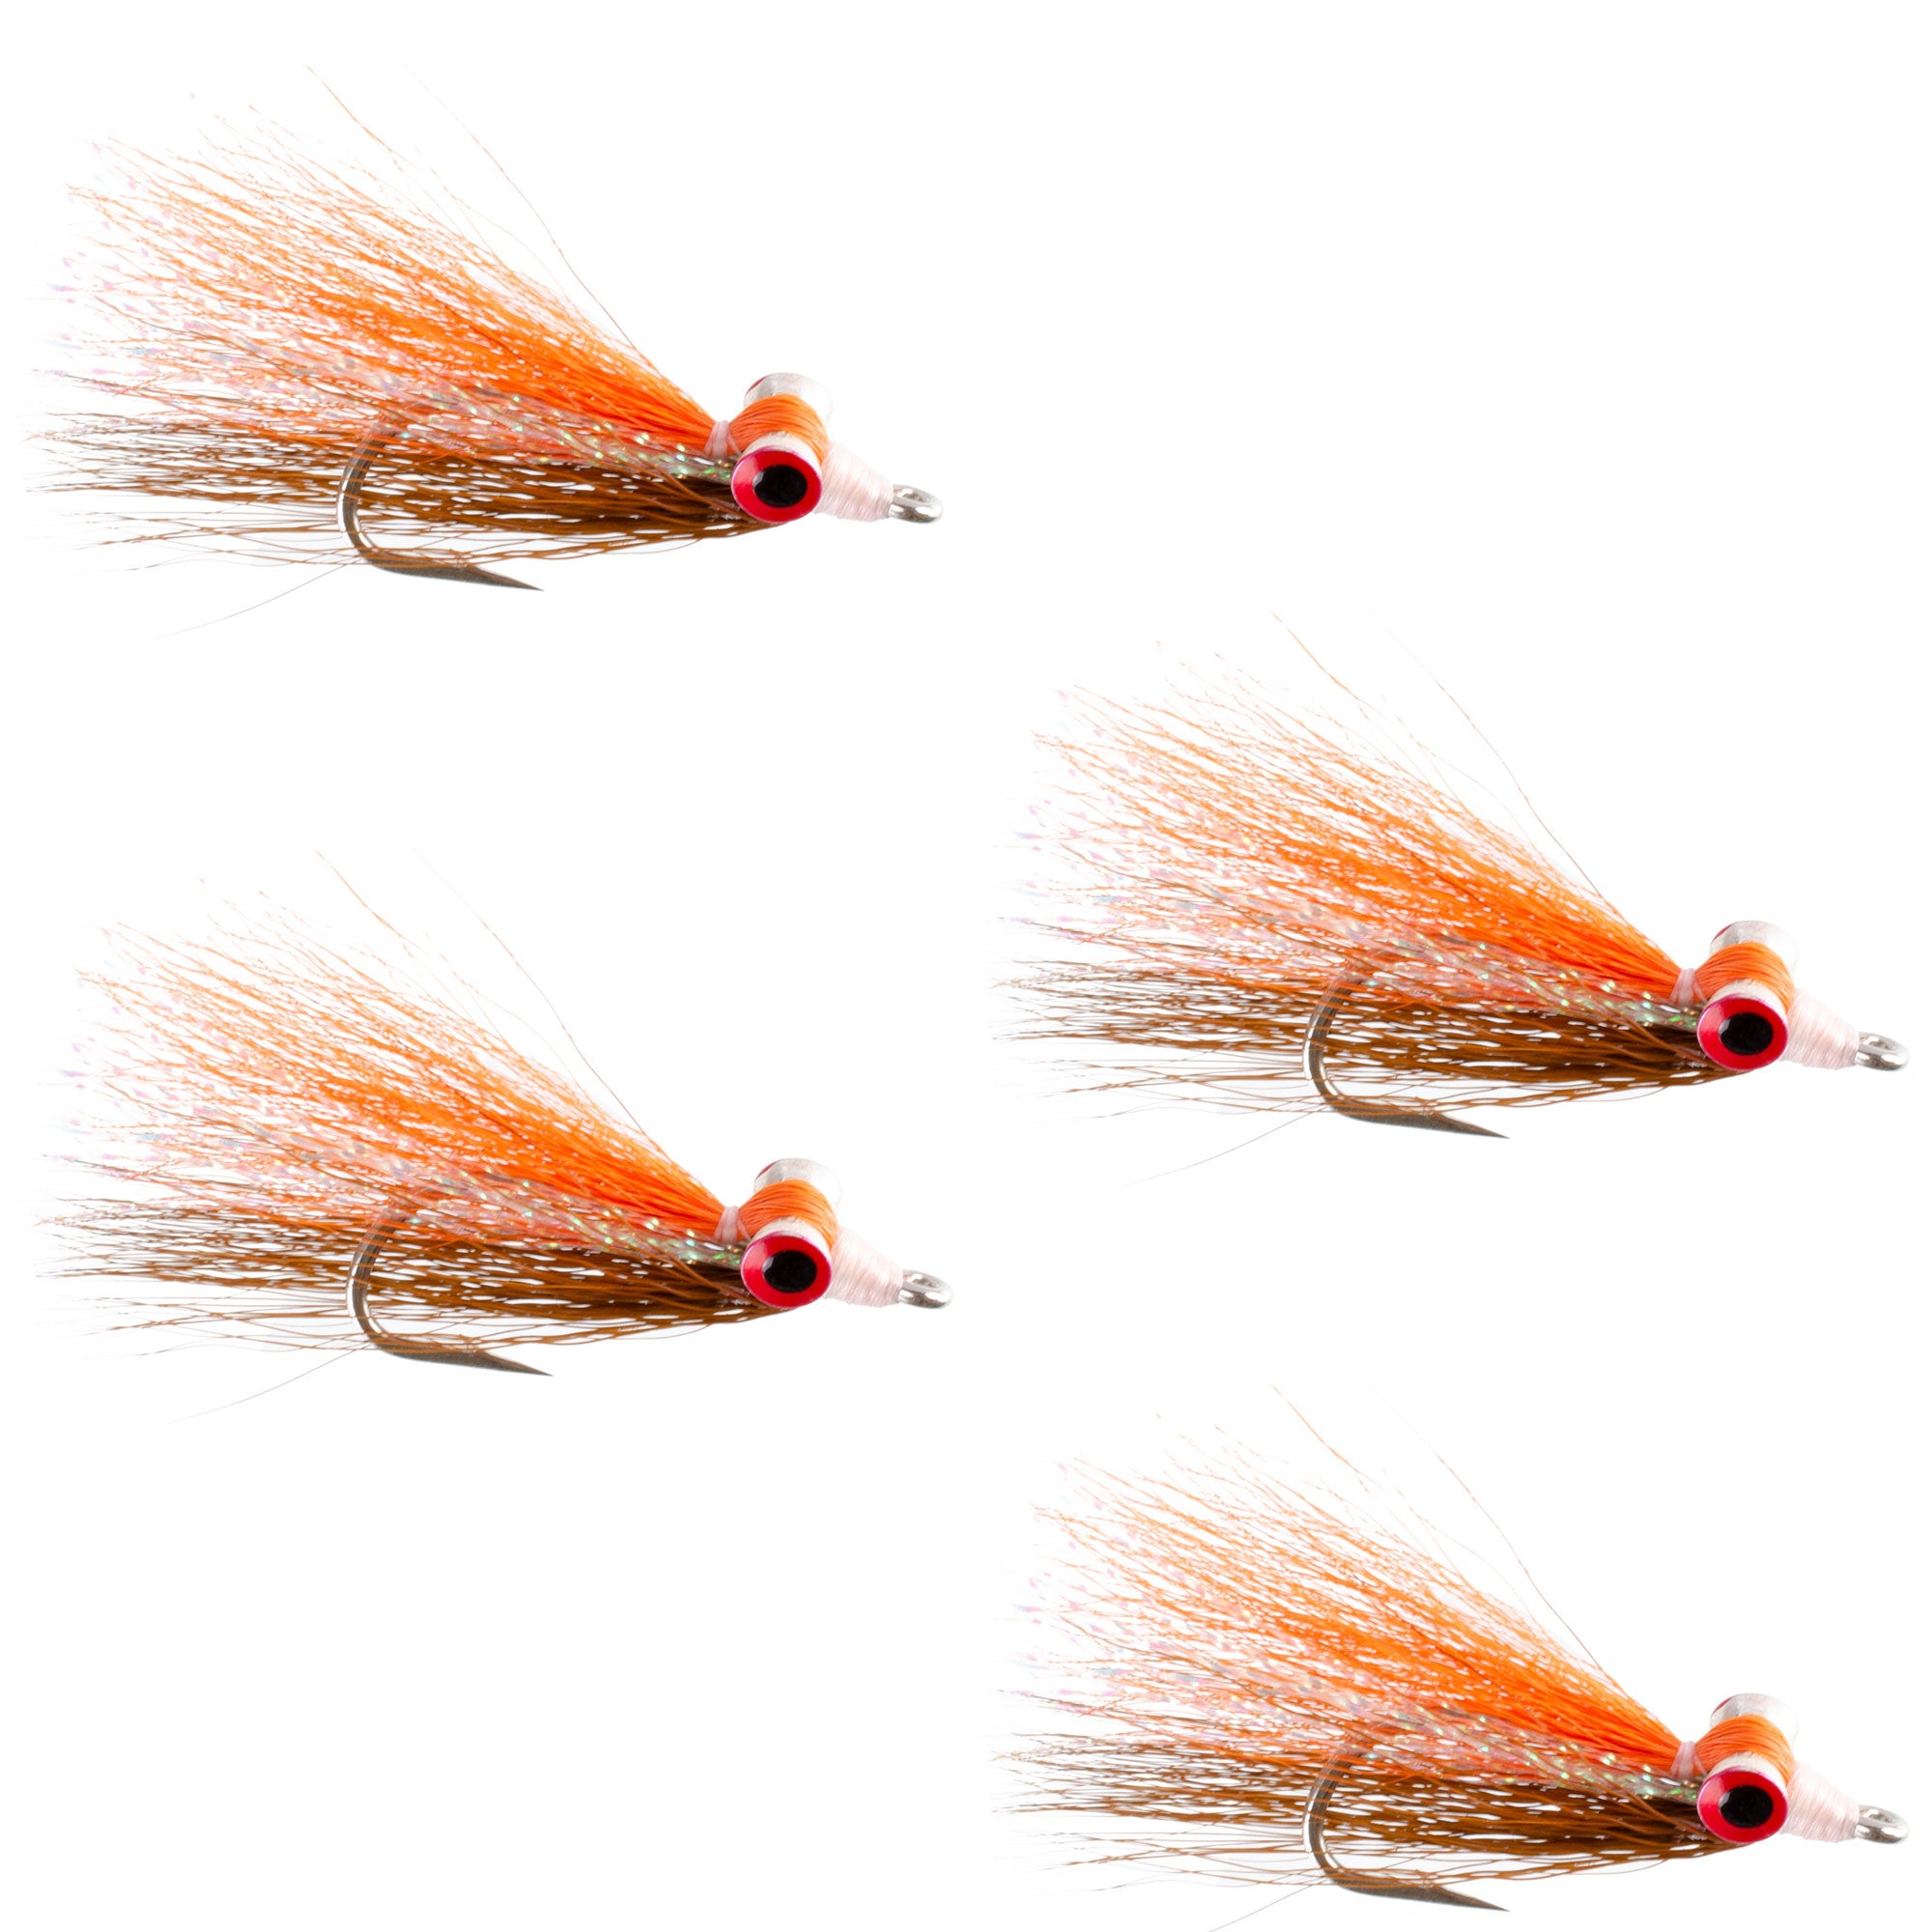 Clousers Deep Minnow Brown Orange Sunfish - Streamer Fly Fishing Flies